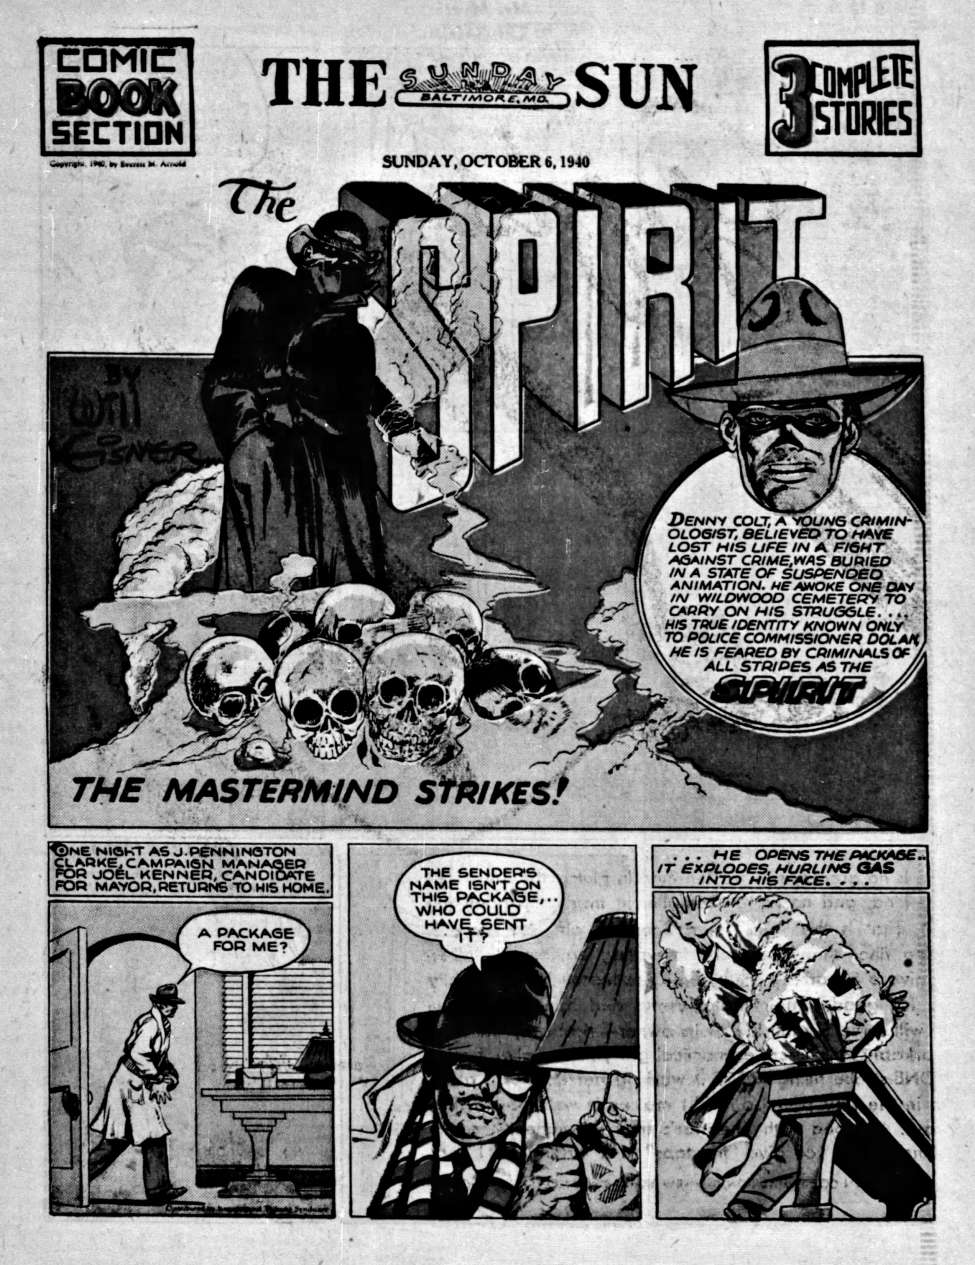 Comic Book Cover For The Spirit (1940-10-06) - Baltimore Sun (b/w)